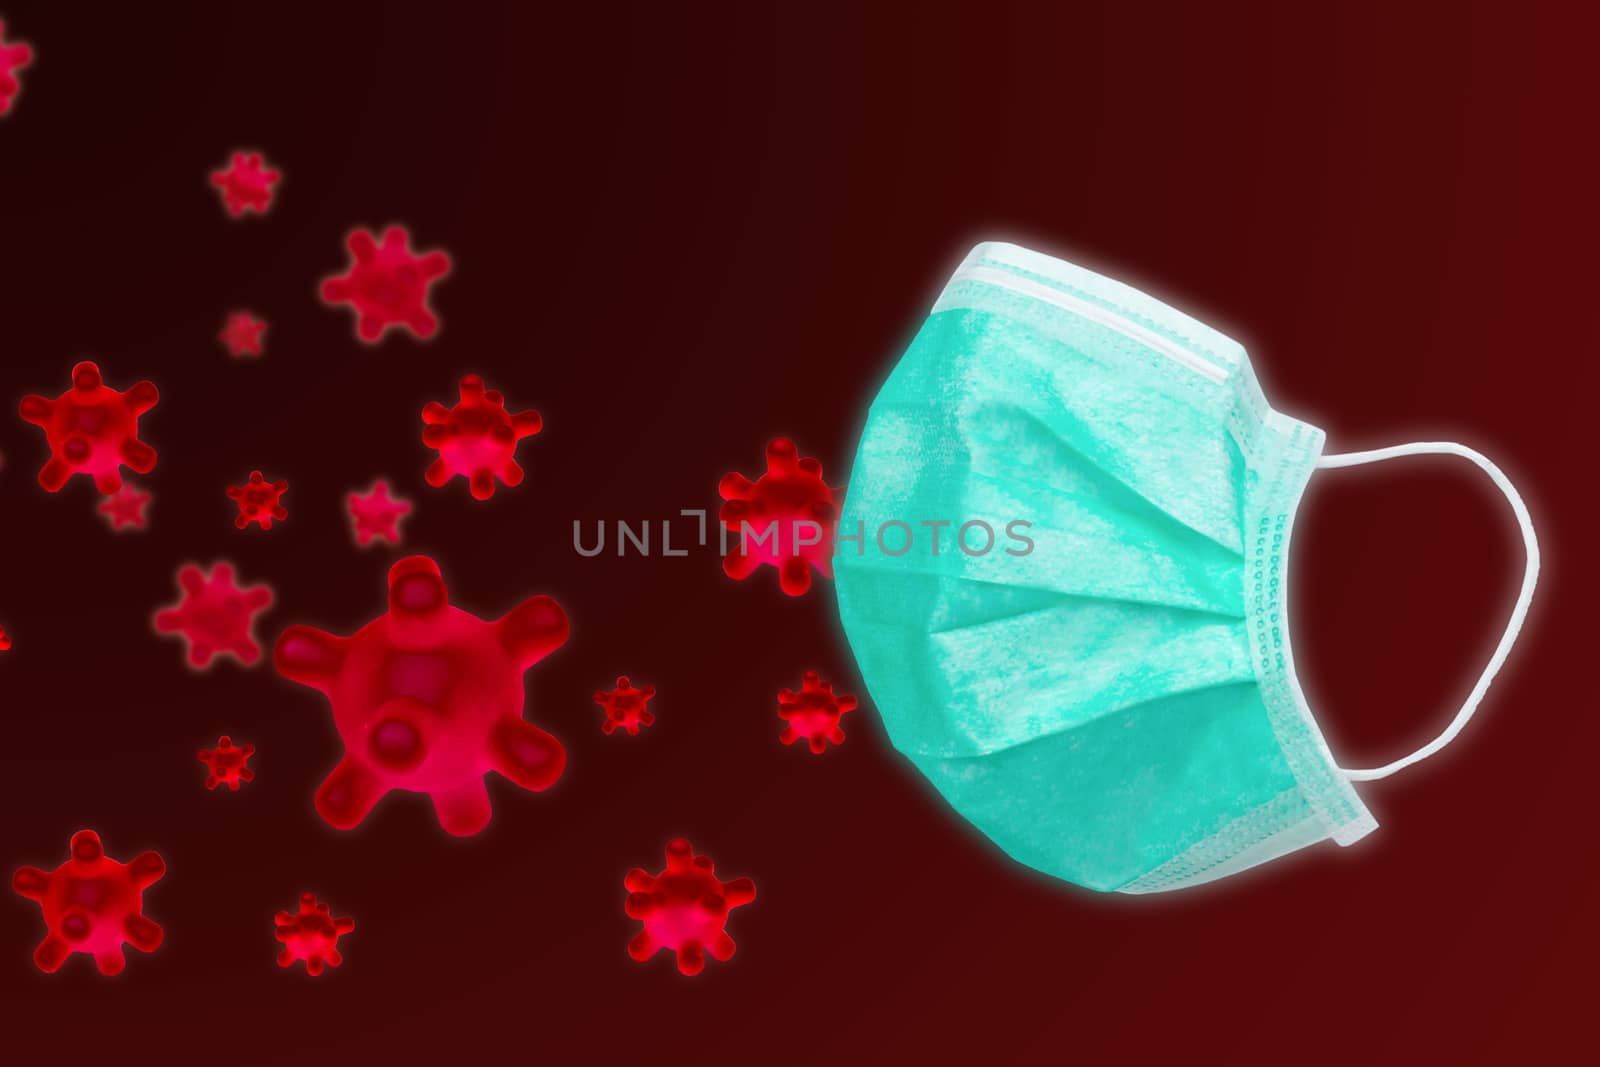 Mask virus protection Coronavirus 2019 (Covid-19) on a Red background